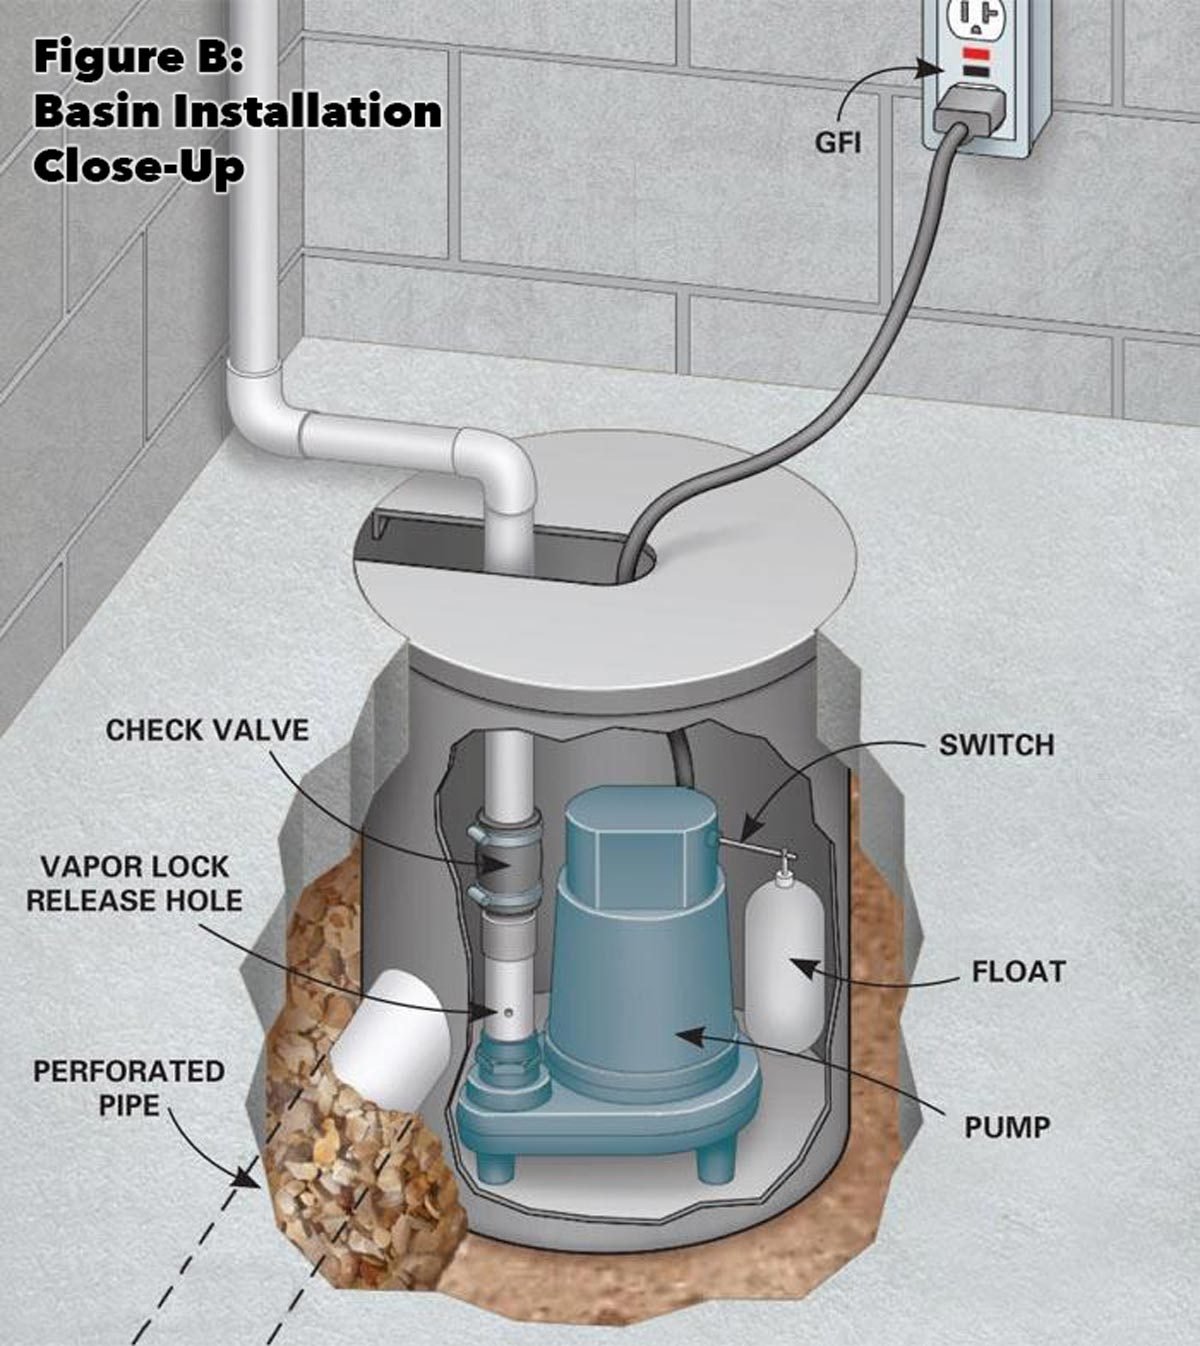 water basin basement drainage system